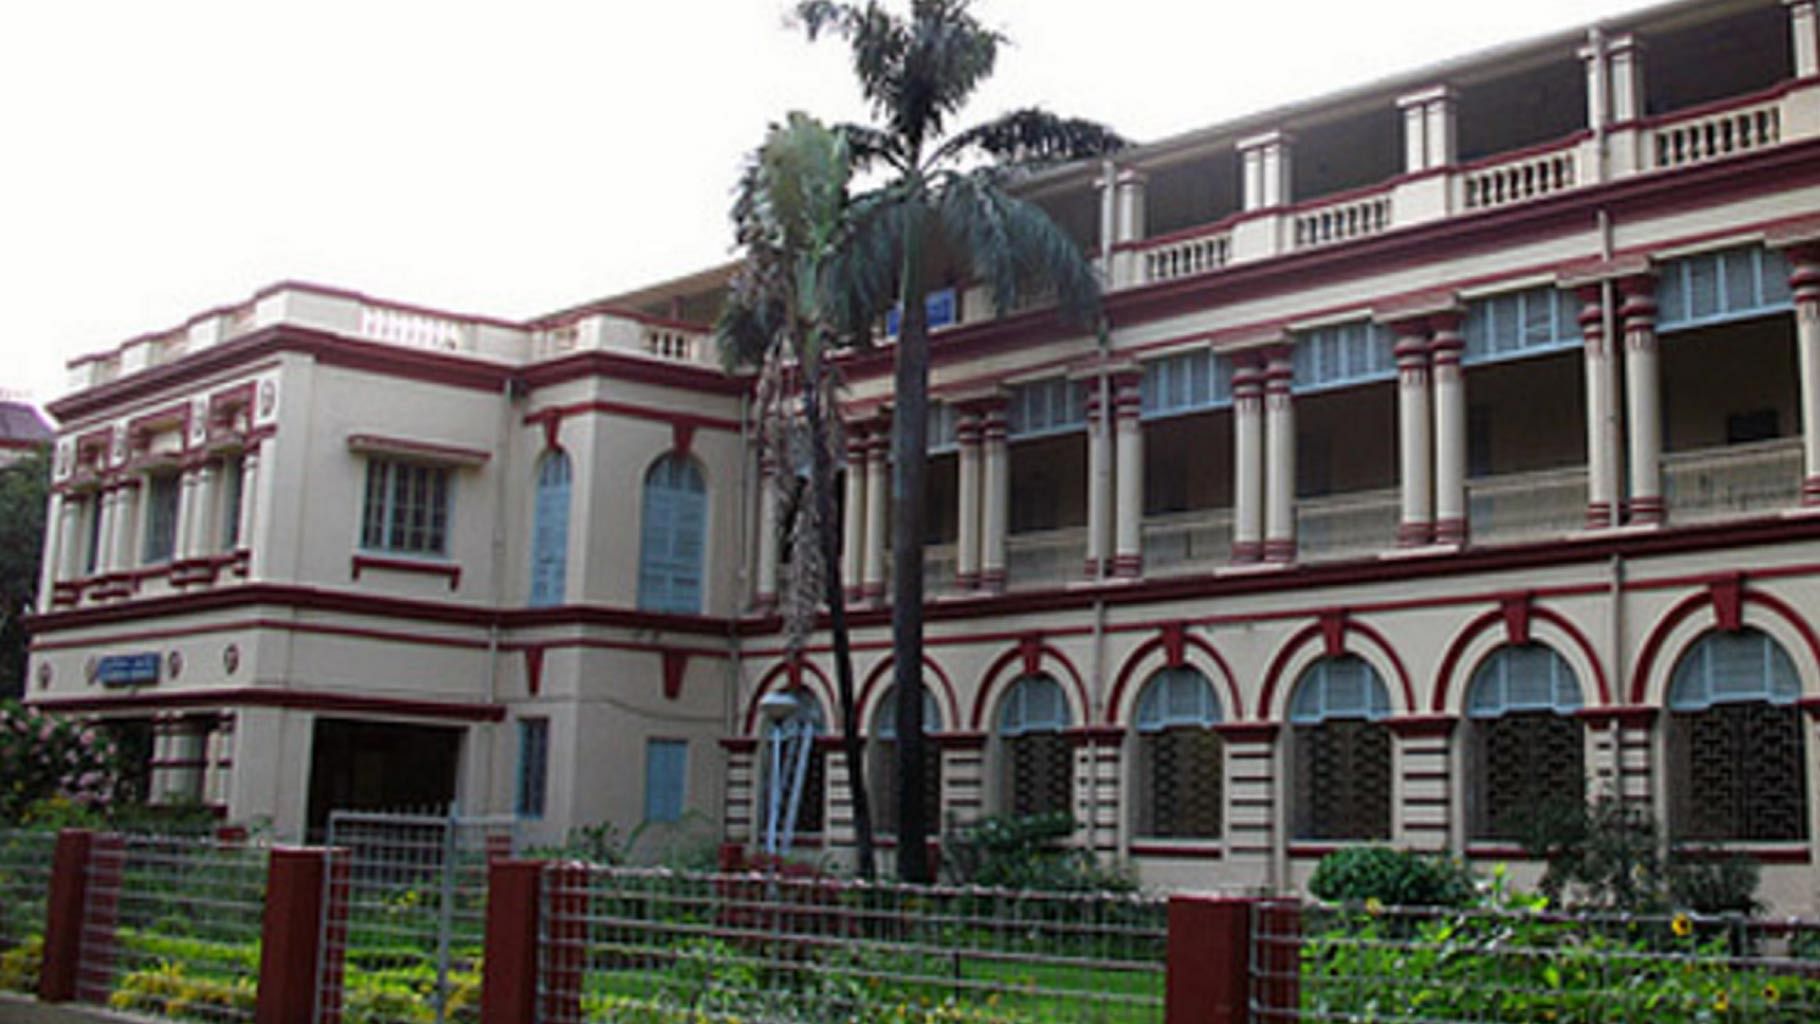 The Jadavpur University campus. (Photo Courtesy: <a href="http://www.jaduniv.edu.in/">Jadavpur University</a>)